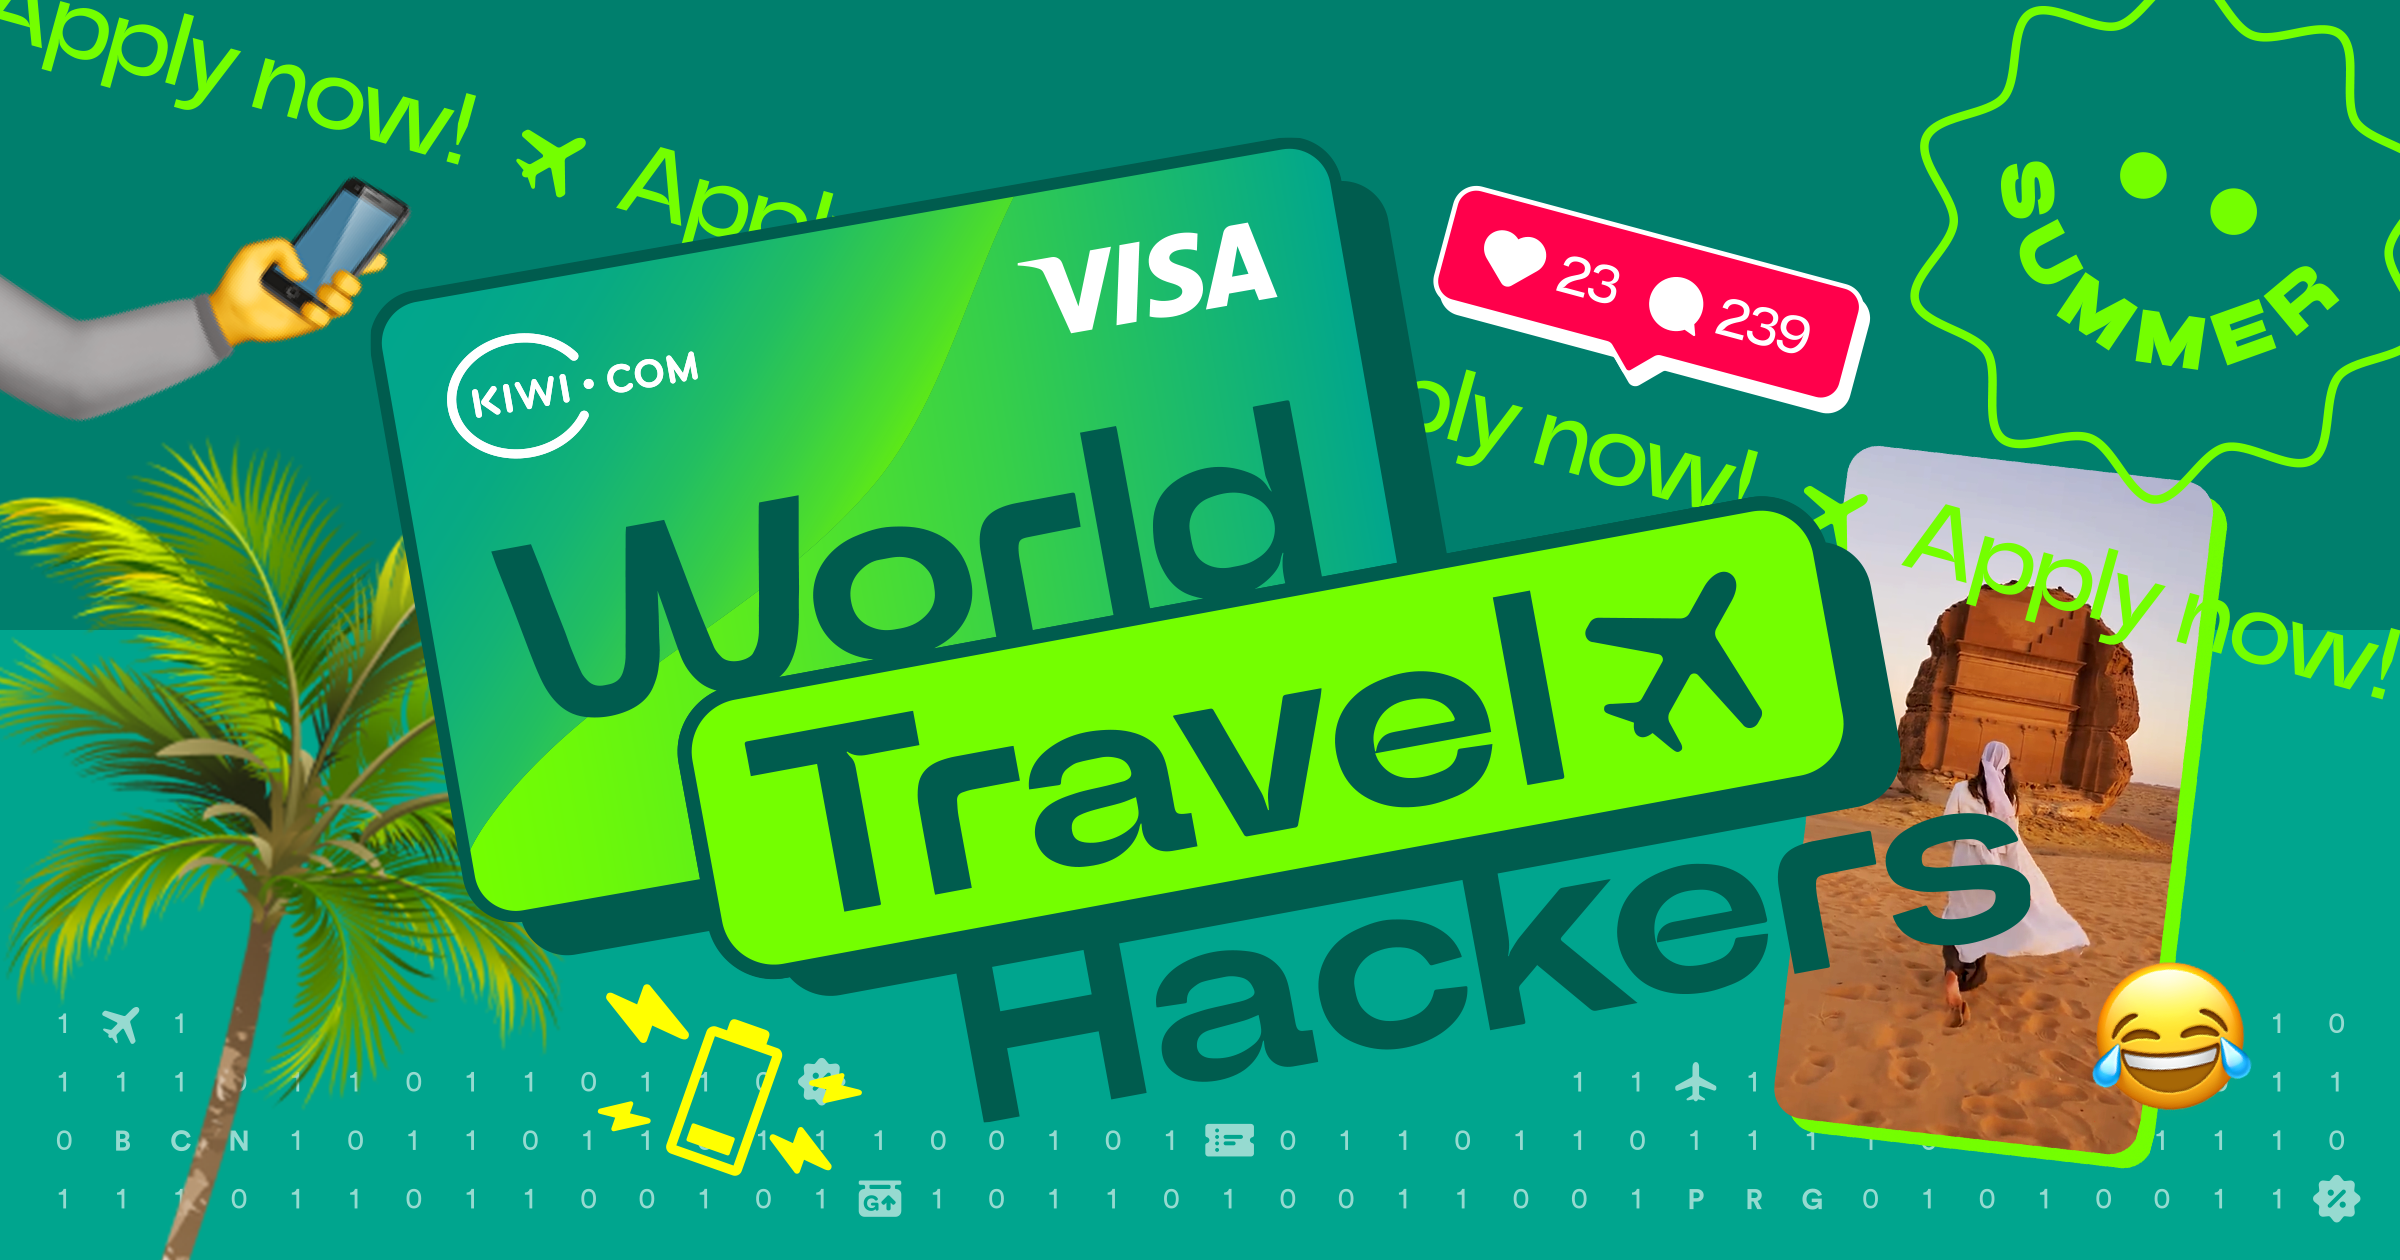 Kiwi.com world travel hacker job